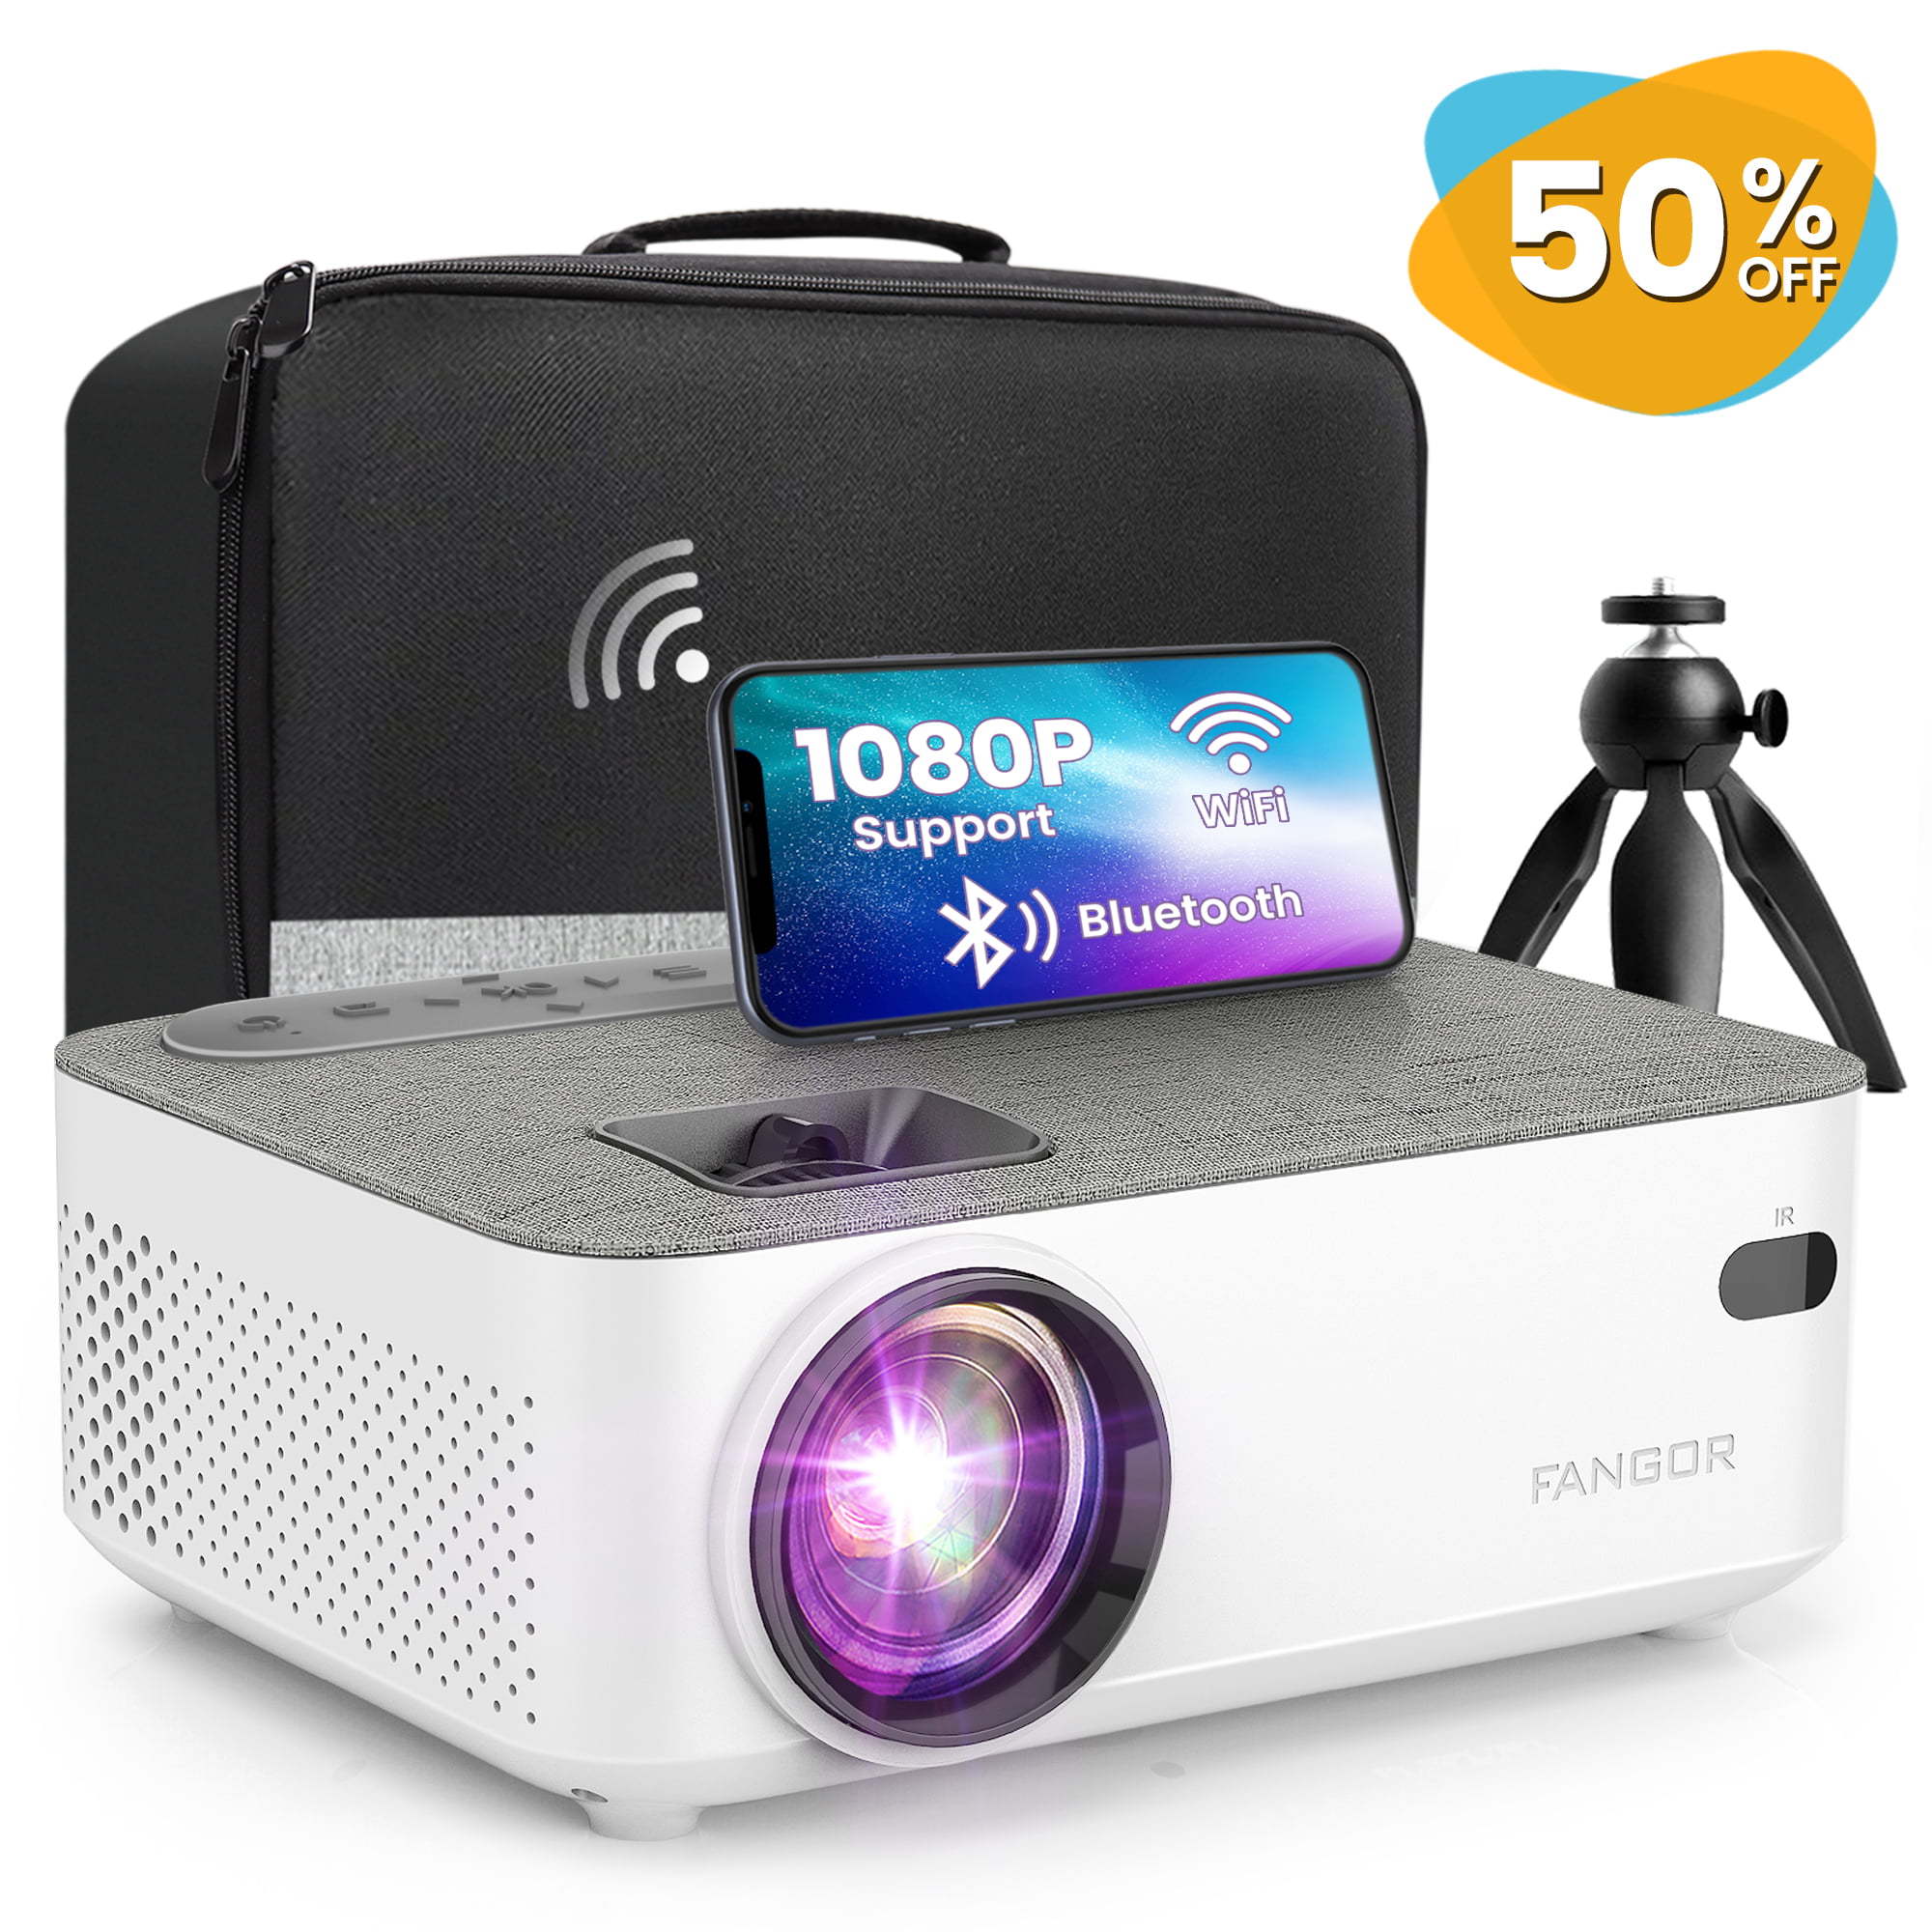 FANGOR 1080p Support Bluetooth Projector, Portable Mini Projector 